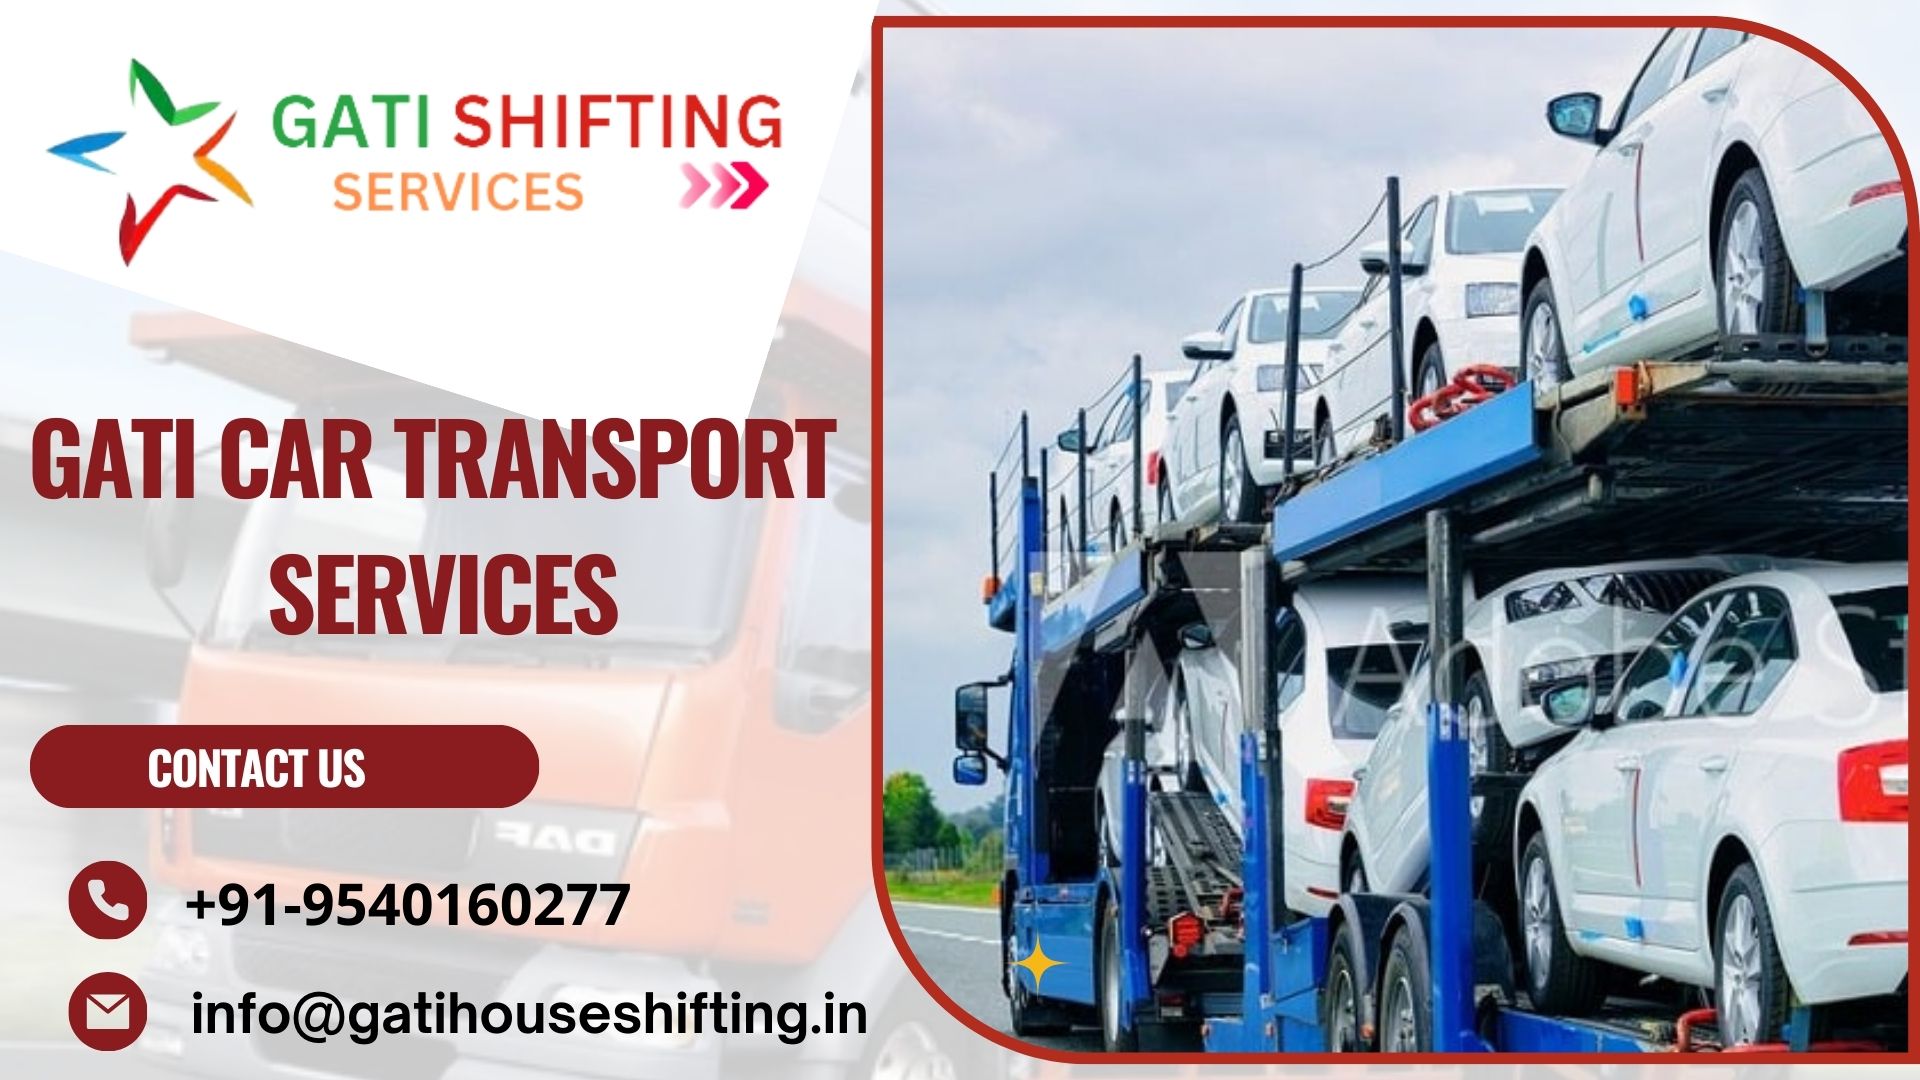 Car transport services in Kochi